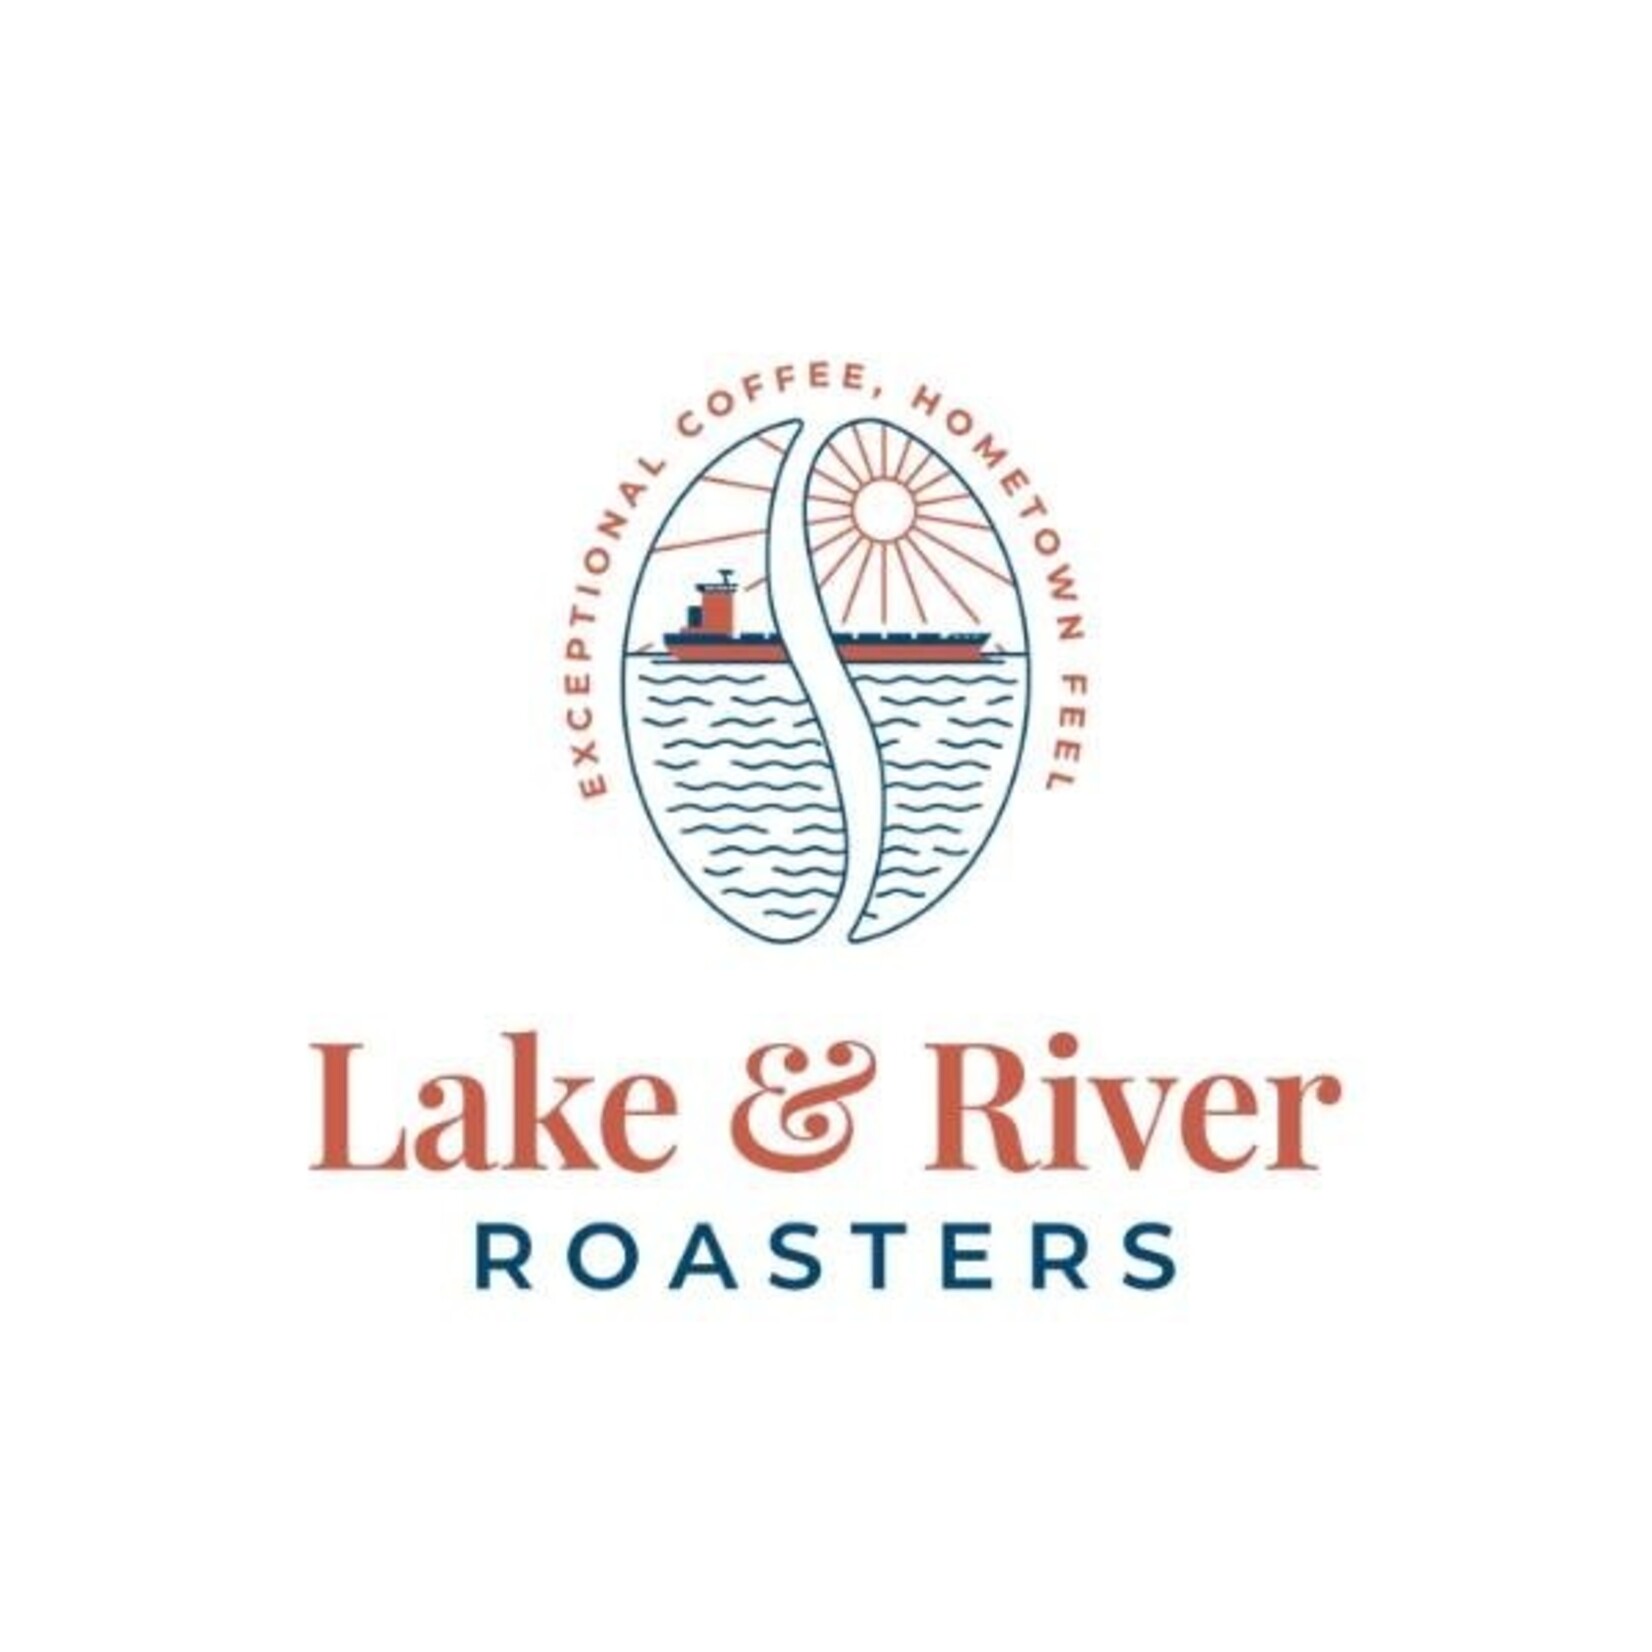 Lake & River Roasters Lake & River Roasters